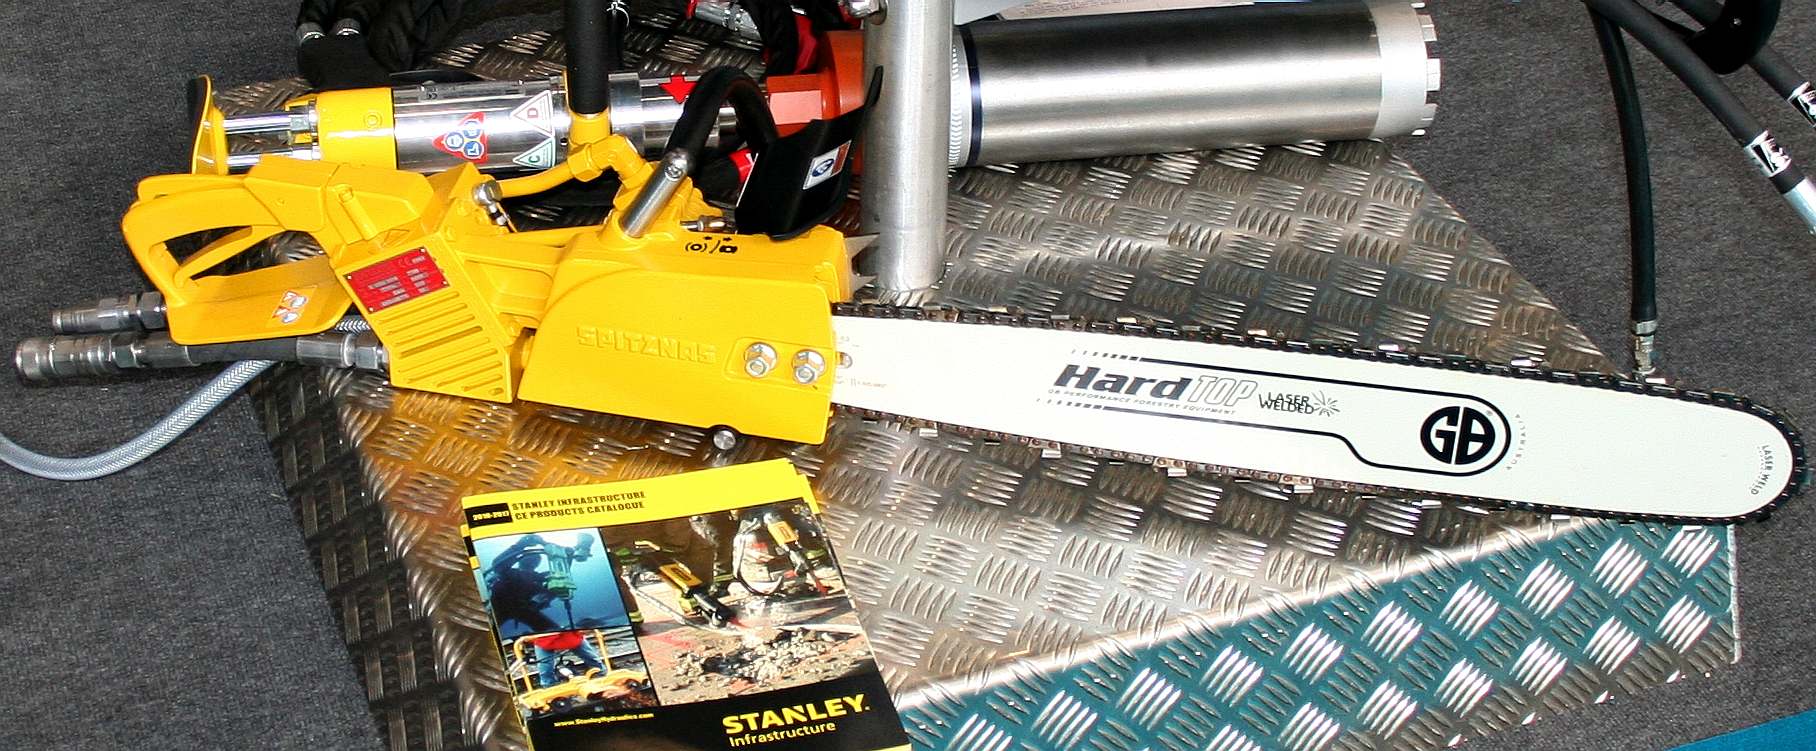 Stanley infrastructure hydraulic chain saw